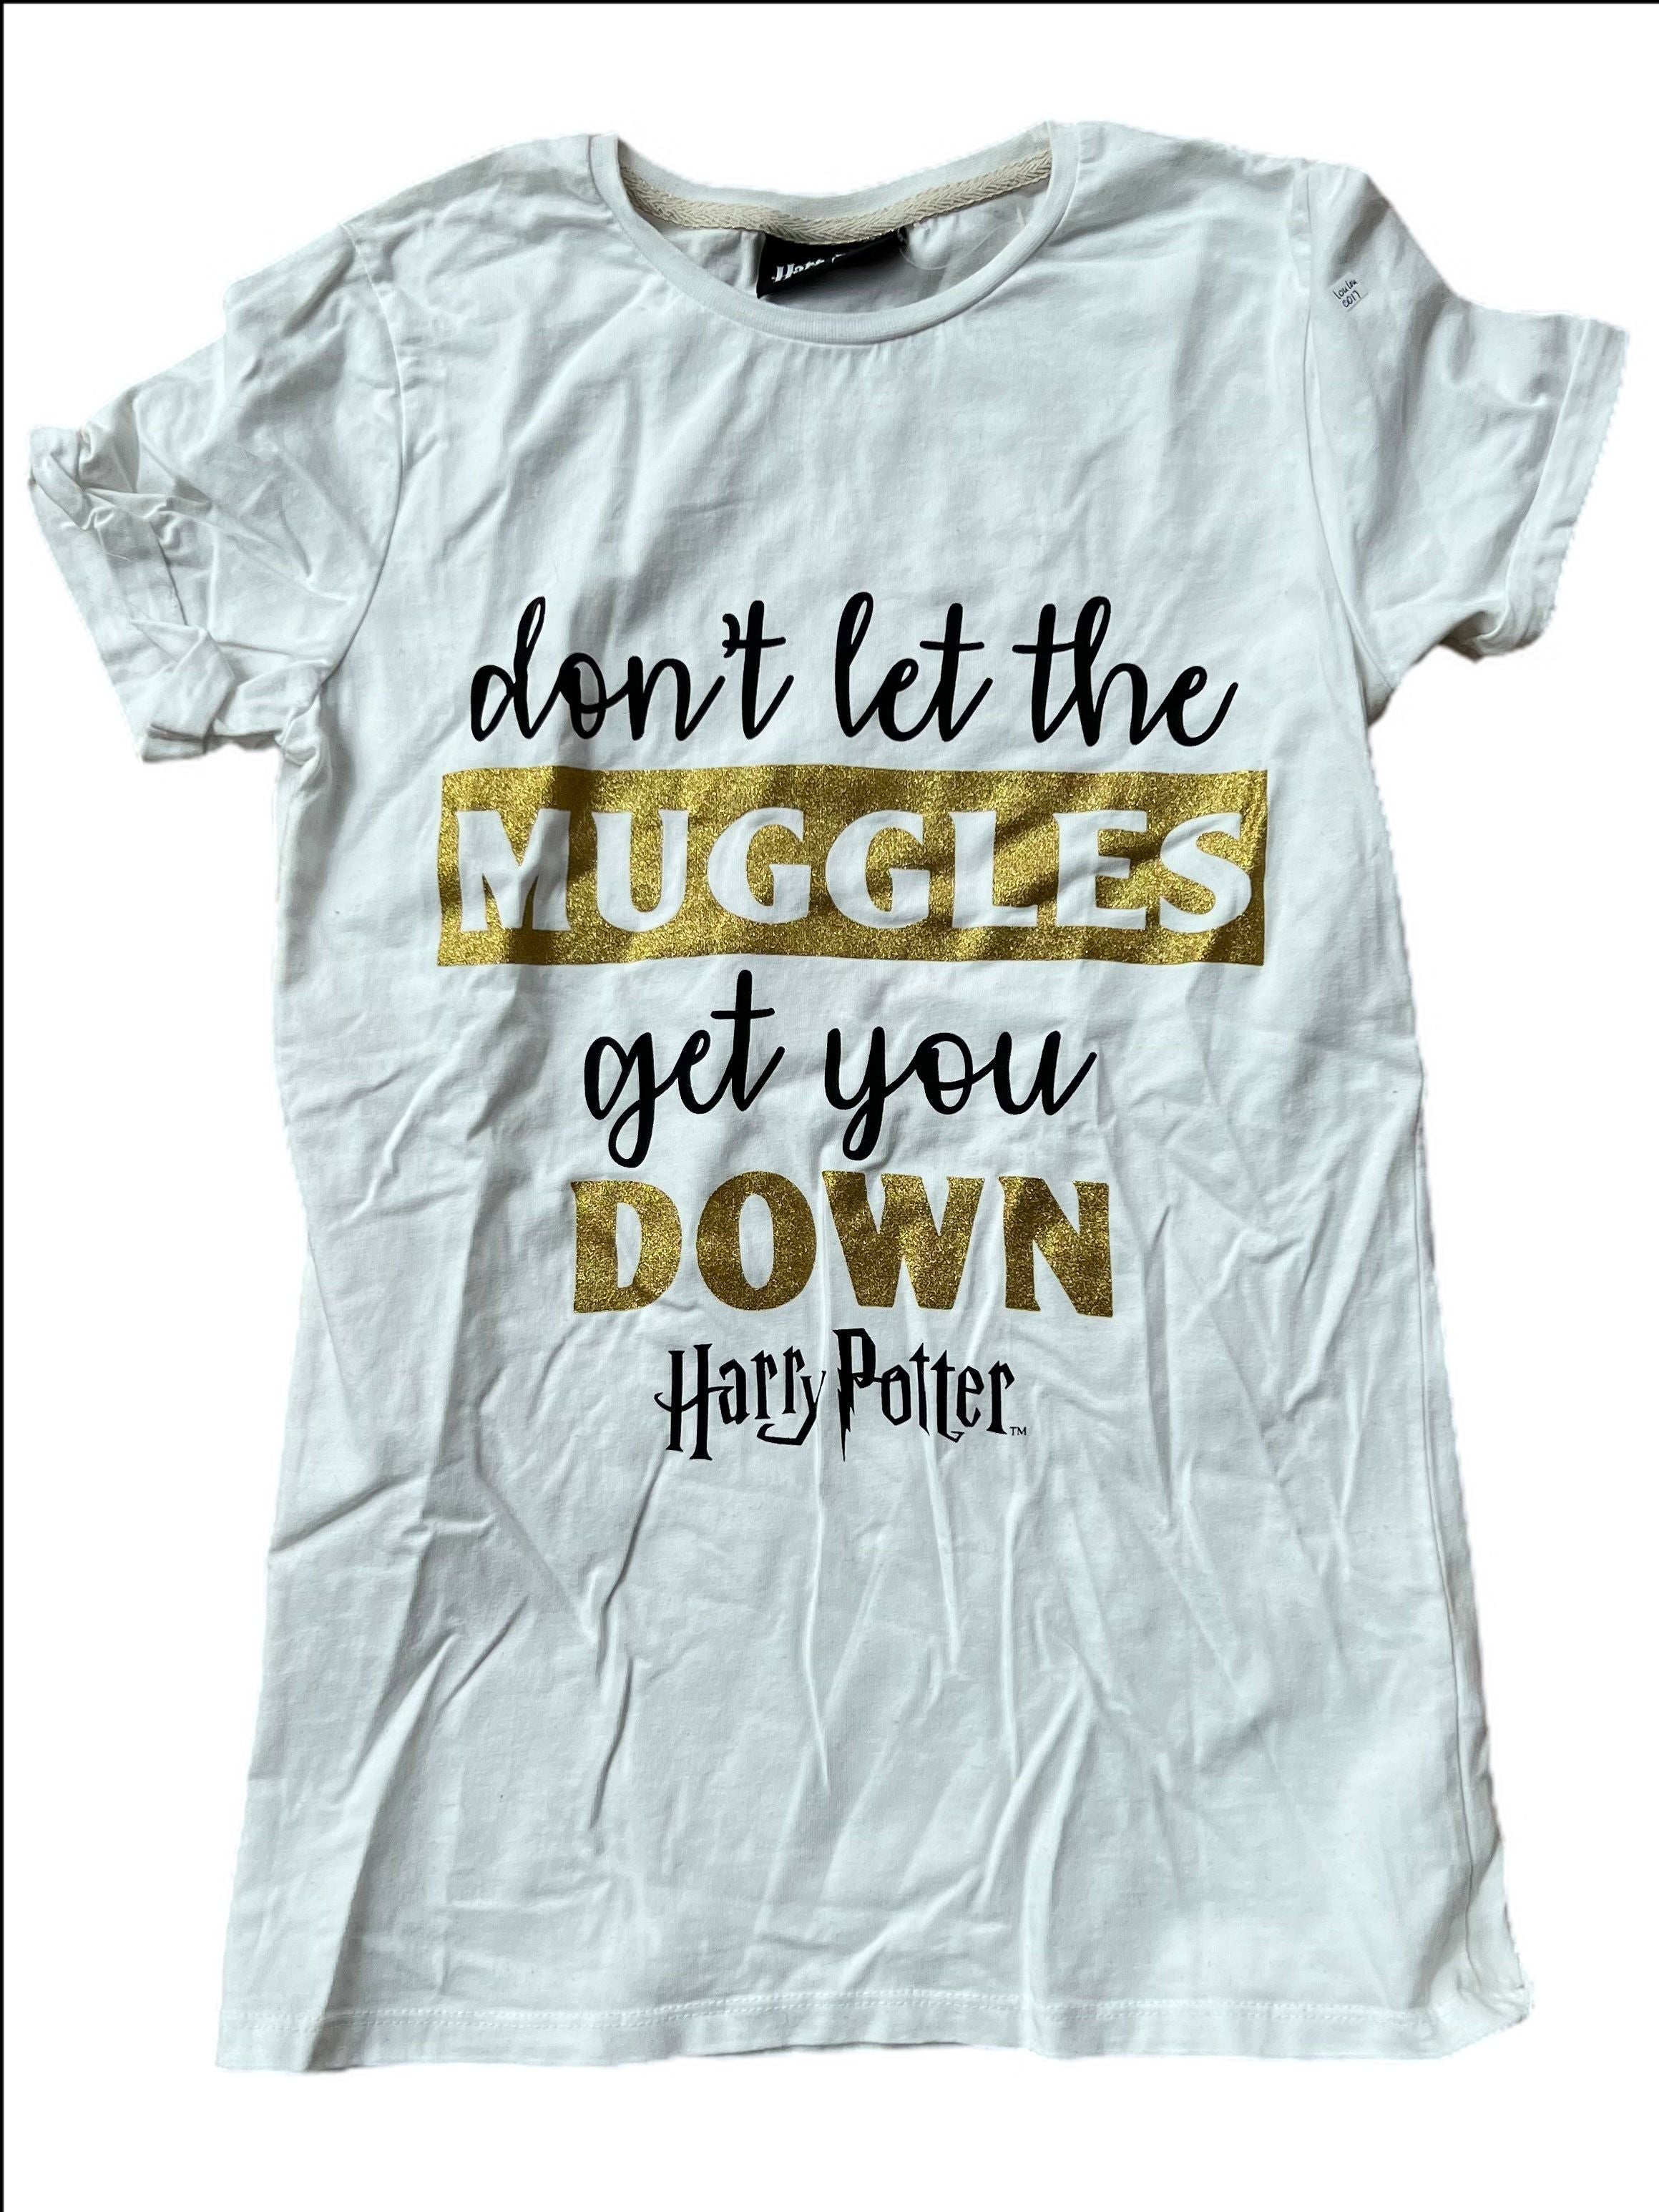 Harry Potter Tee Shirt